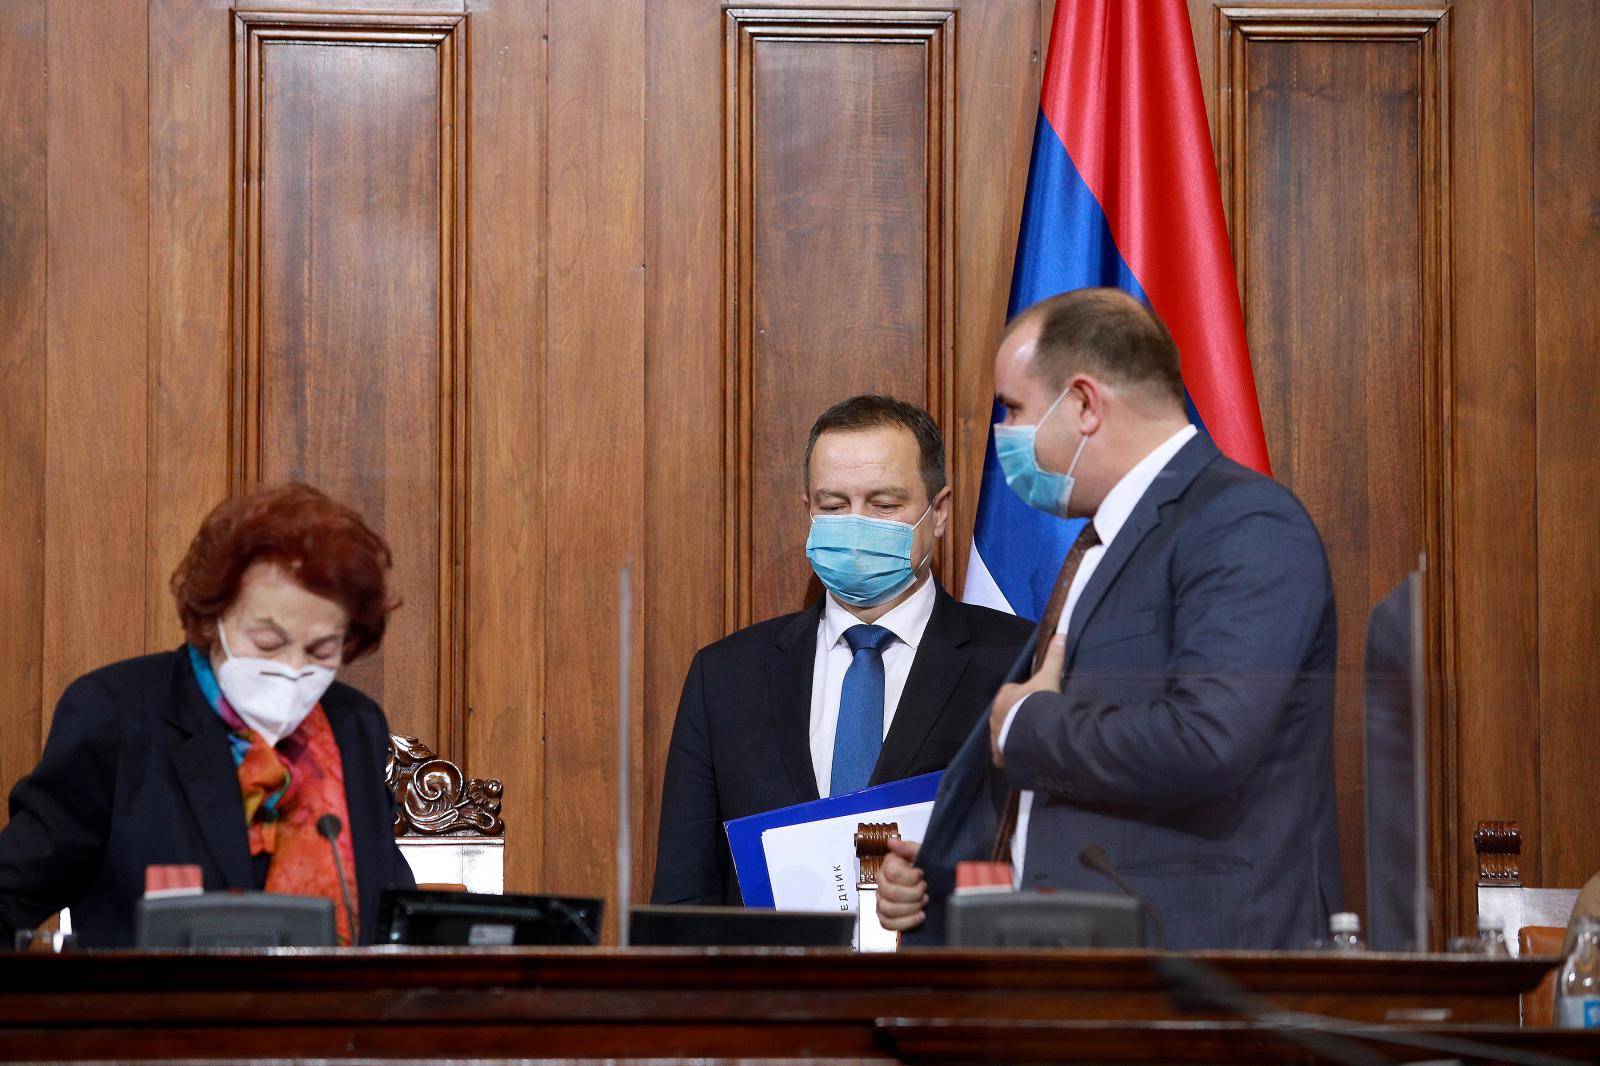 MPs elected Ivica Dacic as President of the Serbian Parliament.

Narodni poslanici su izabrali Ivicu Dacica za predsednika Skupstine Srbije.